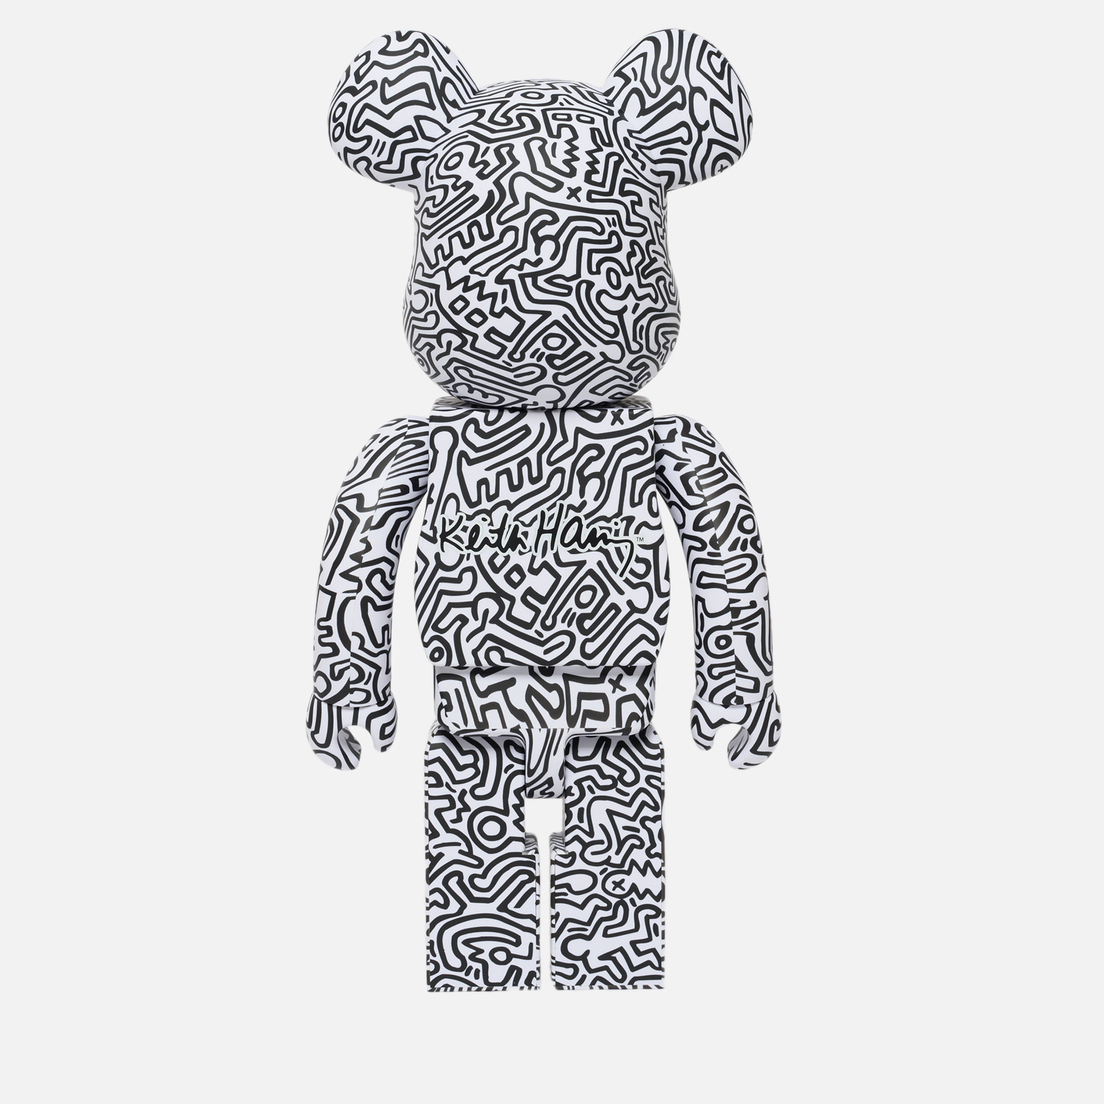 Medicom Toy Игрушка Bearbrick Keith Haring Ver. 4 1000%